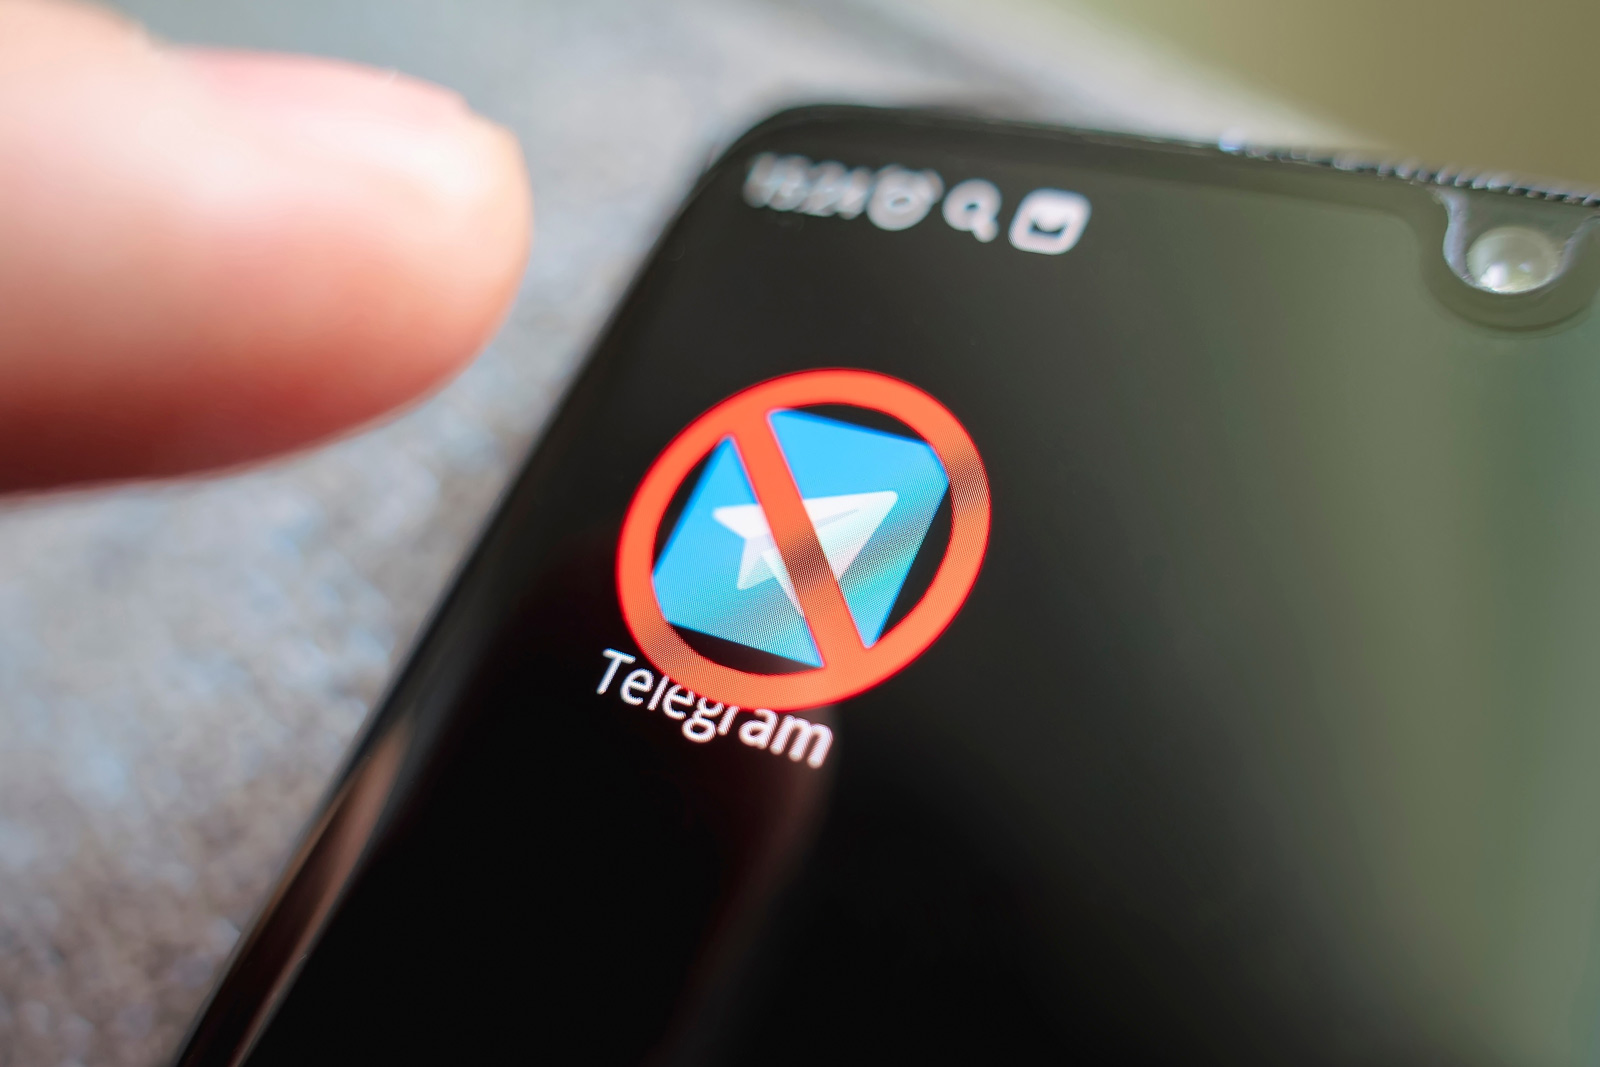 Can Hong Kong block Telegram?